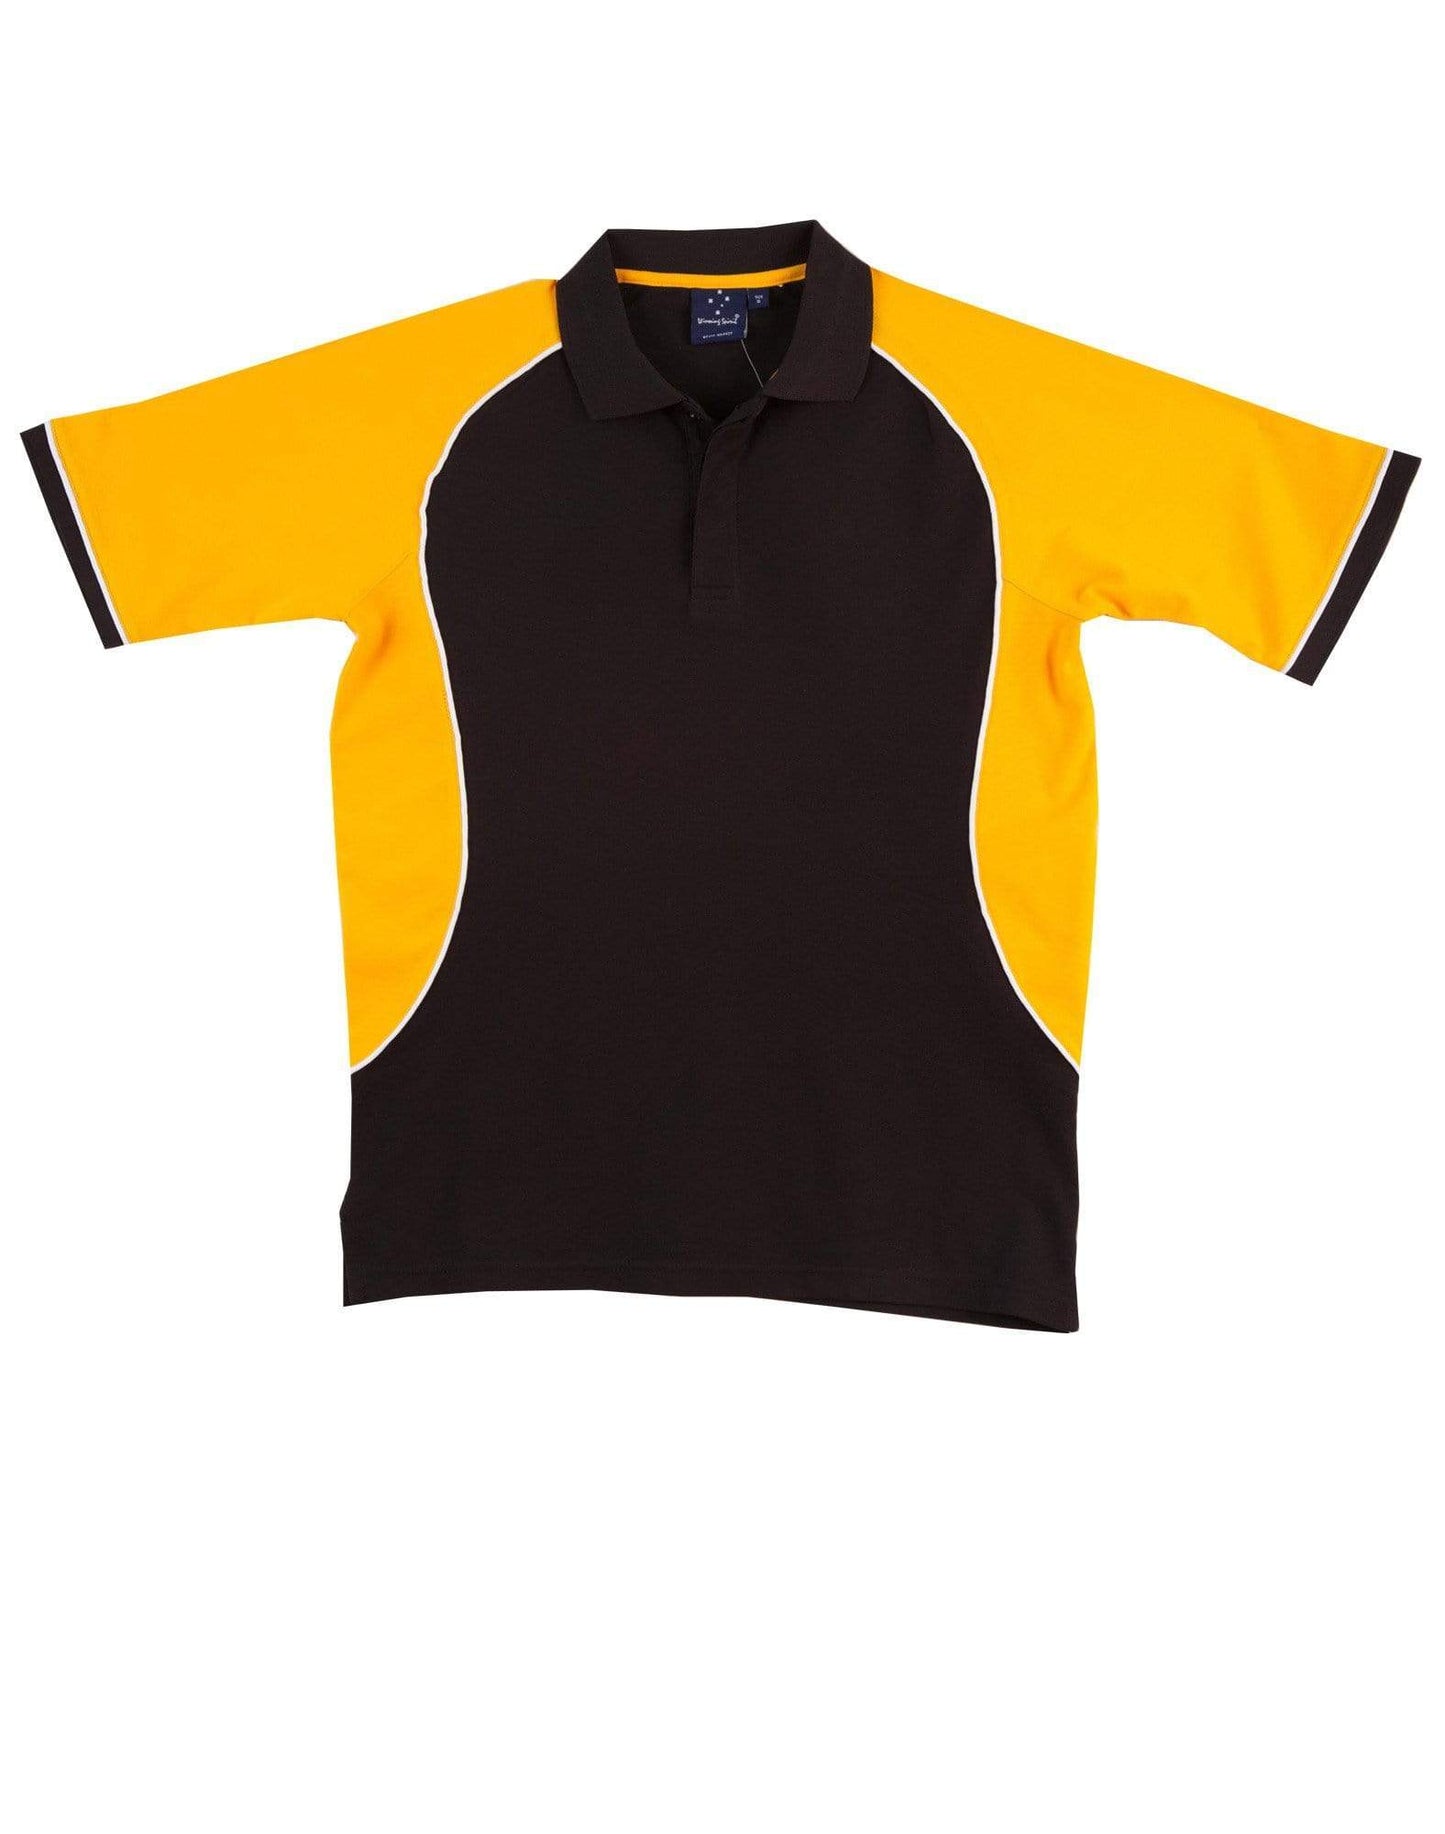 Winning Spirit Arena Polo Shirt  Men's Ps77 Casual Wear Winning Spirit Black/White/Gold S 